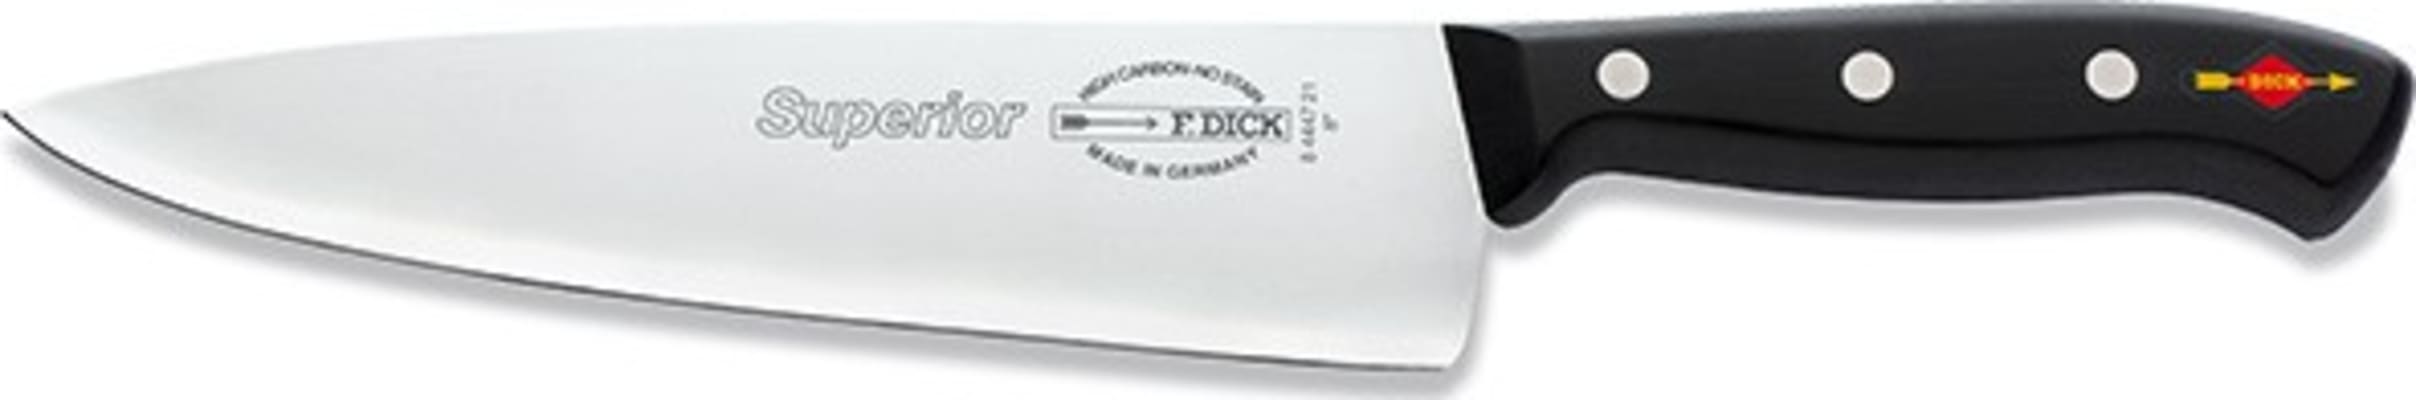 F. Dick Superior kokkahnífur 23 cm.